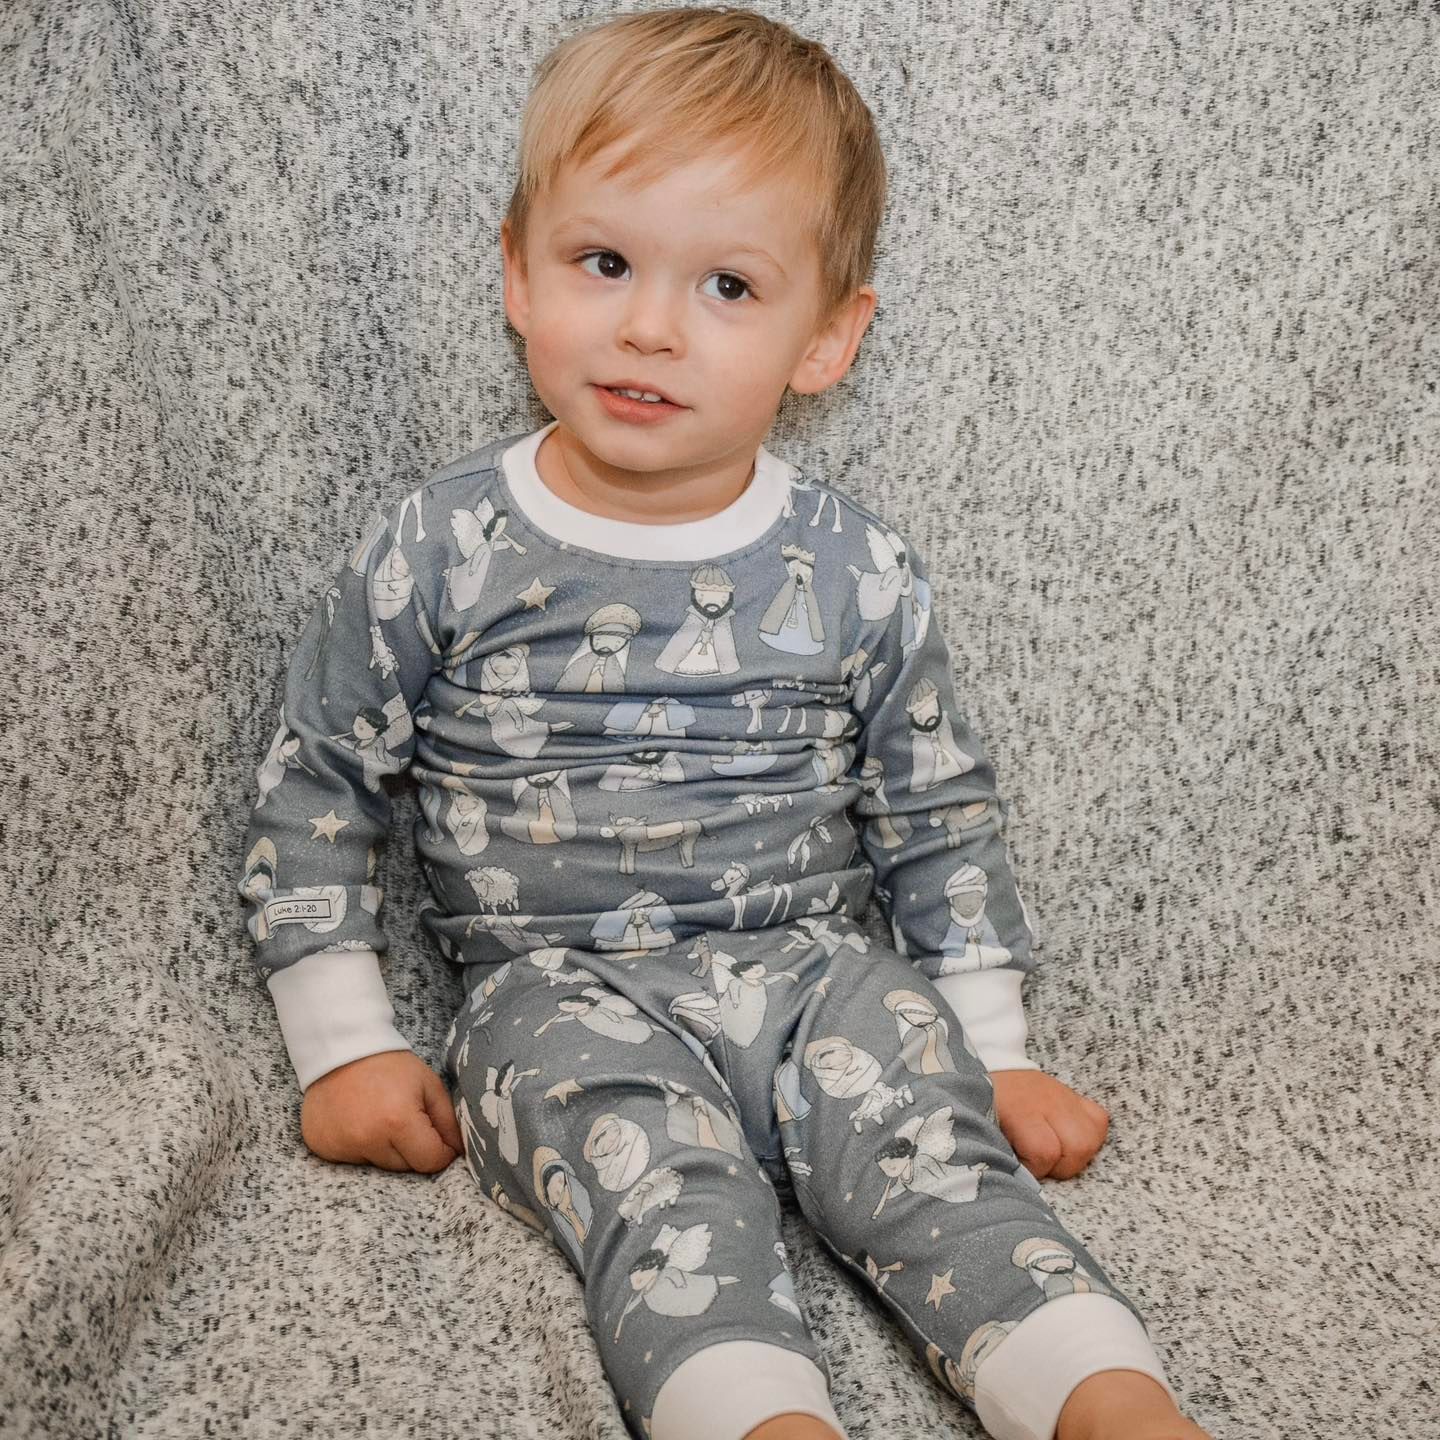 Grey and White Round Neck Matching Family Christmas Pajamas